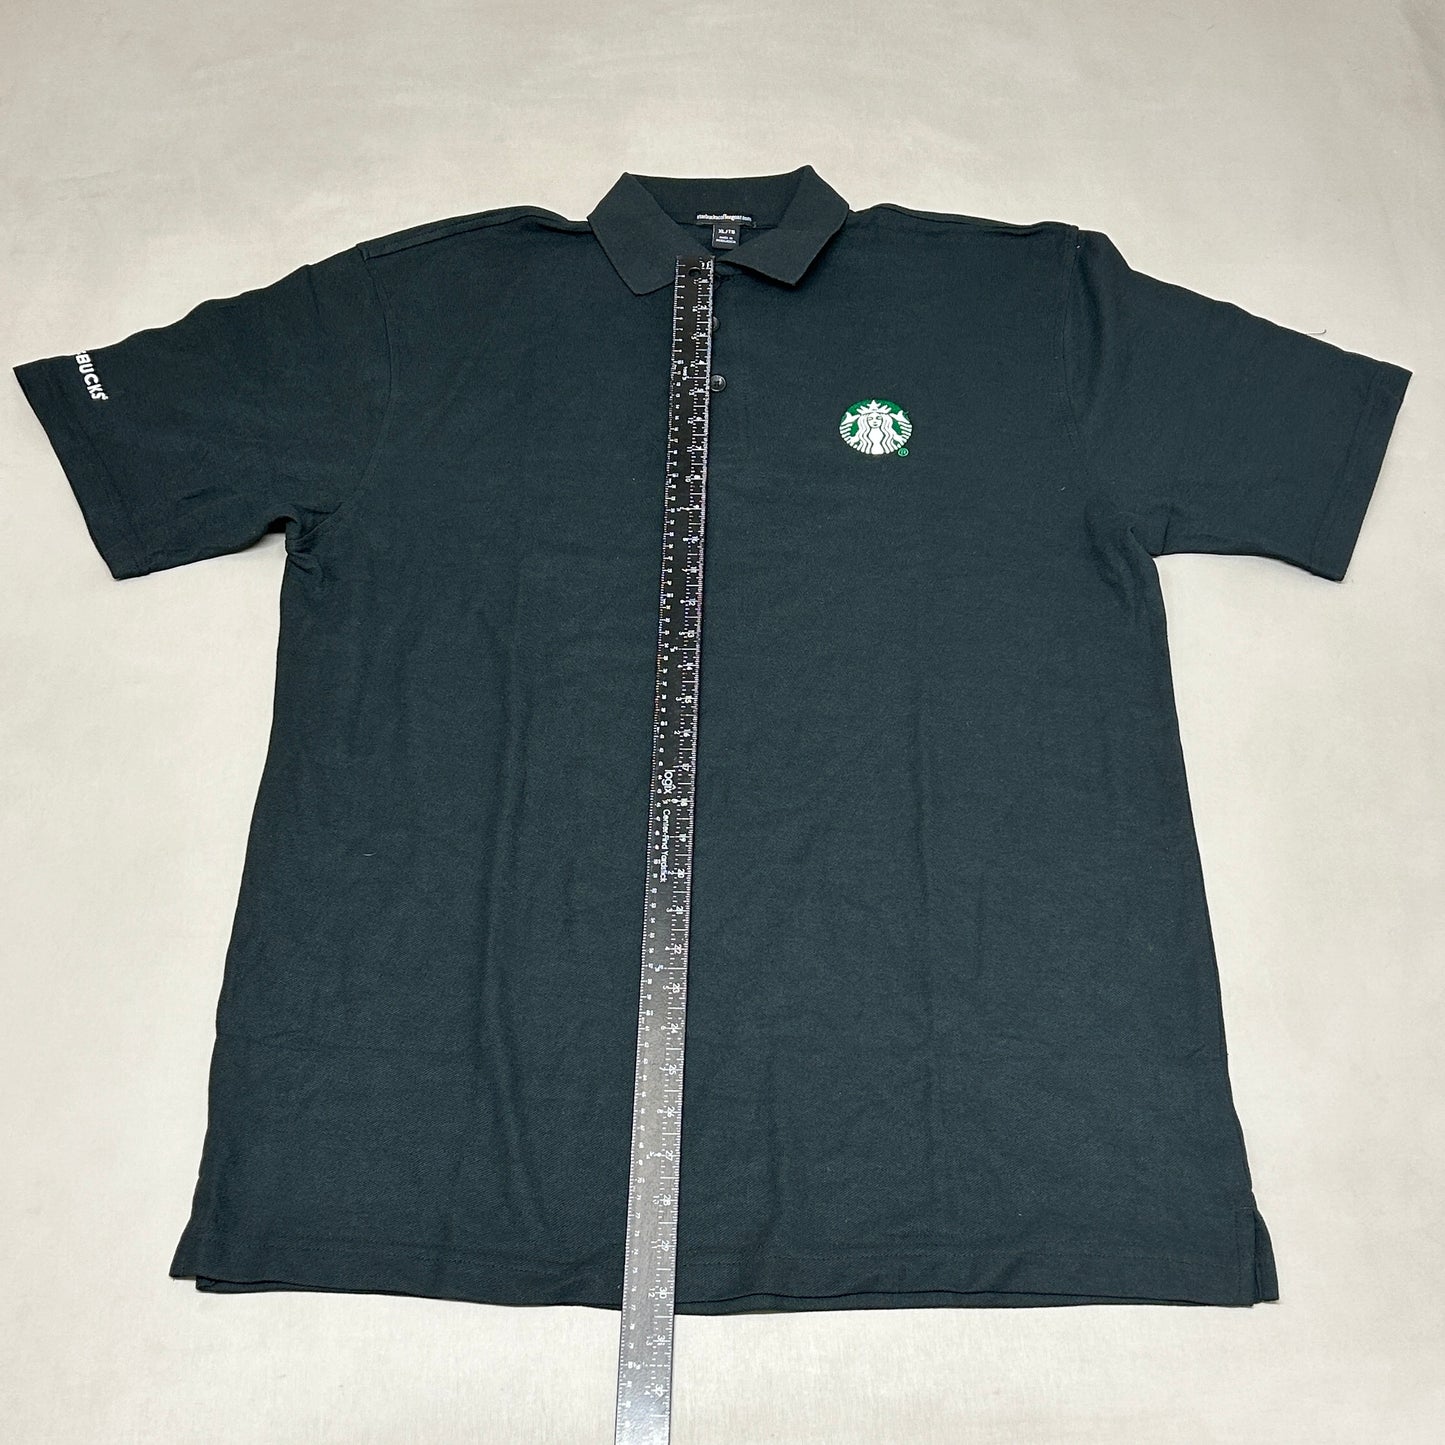 STARBUCKS Embroidered Employee T-Shirt Work Polo Uniform Unisex Sz XL Black (New)